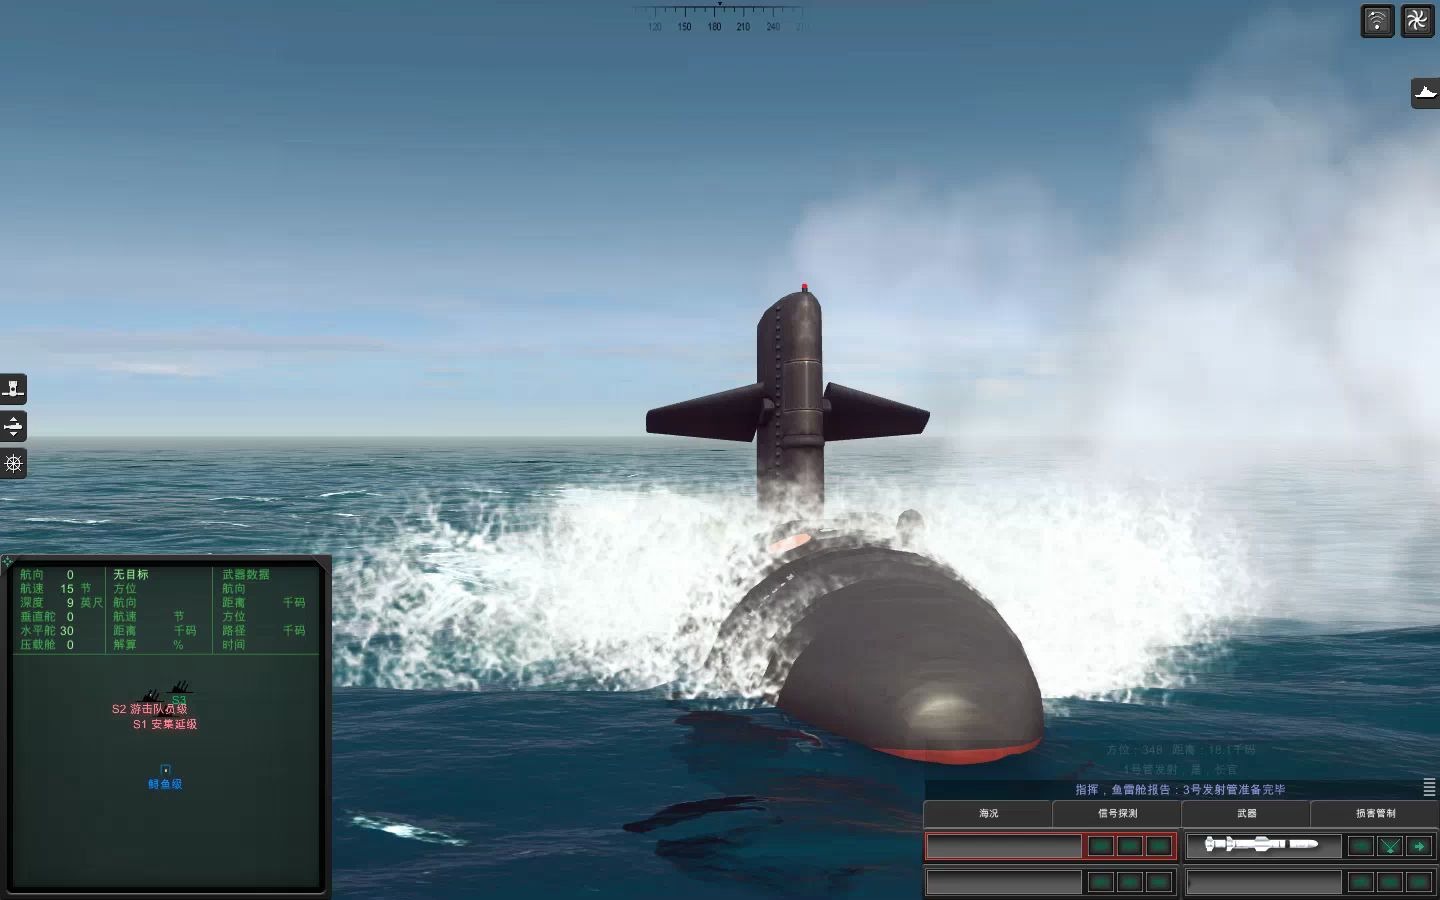 Cold Waters 冰冷海域 鲟鱼级核潜艇潜射导弹测试 哔哩哔哩 つロ干杯 Bilibili